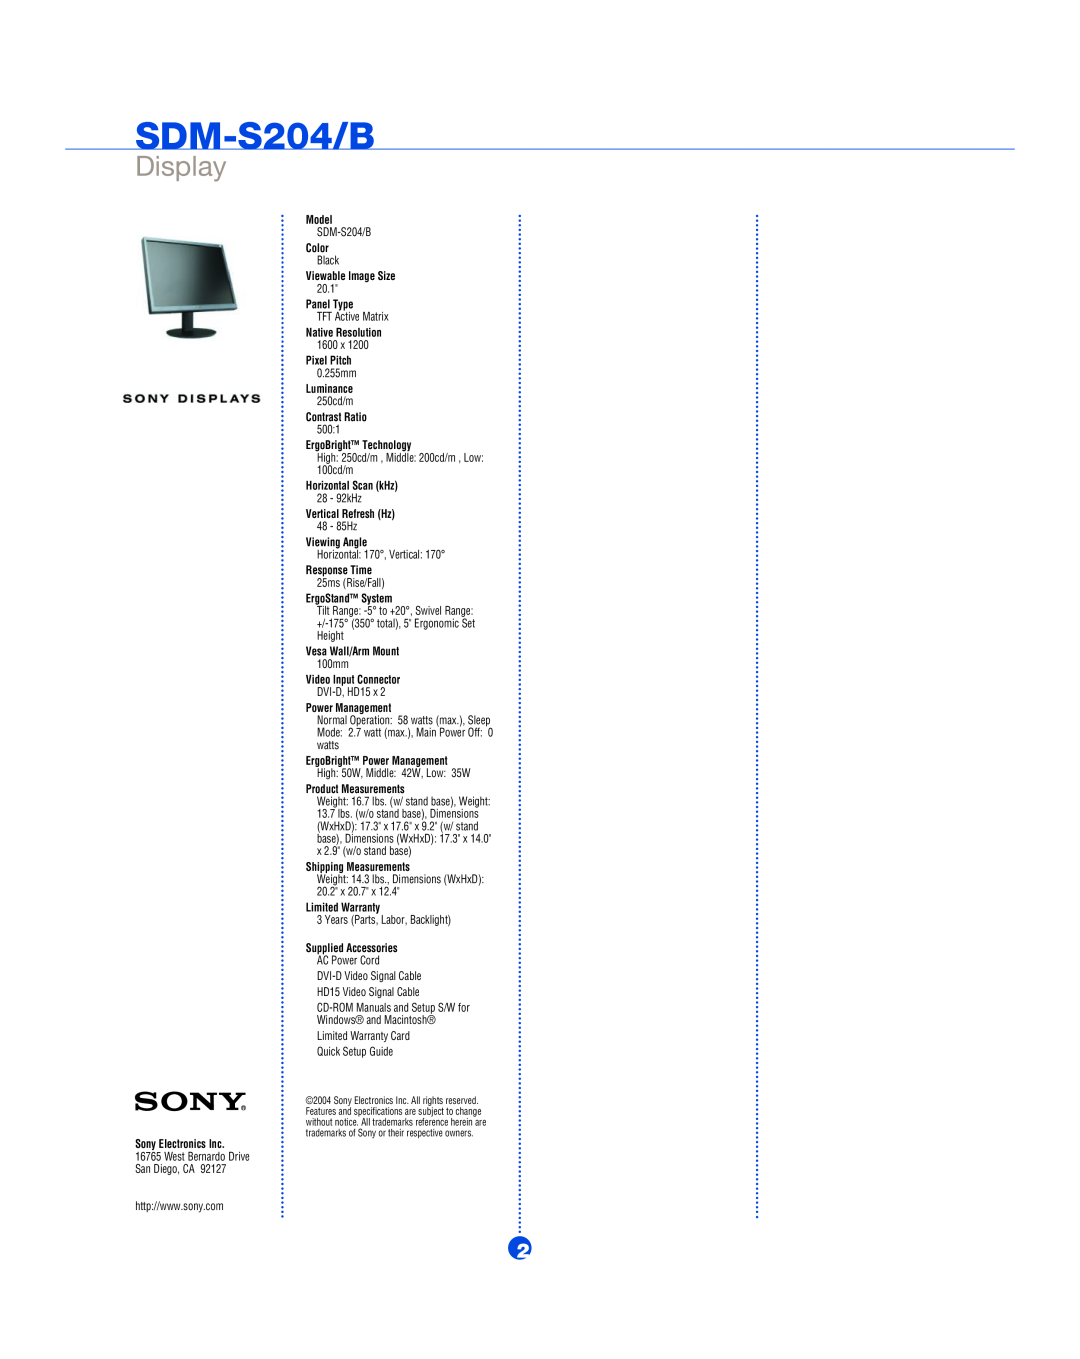 Sony SDM-S204/B manual Display, Model 